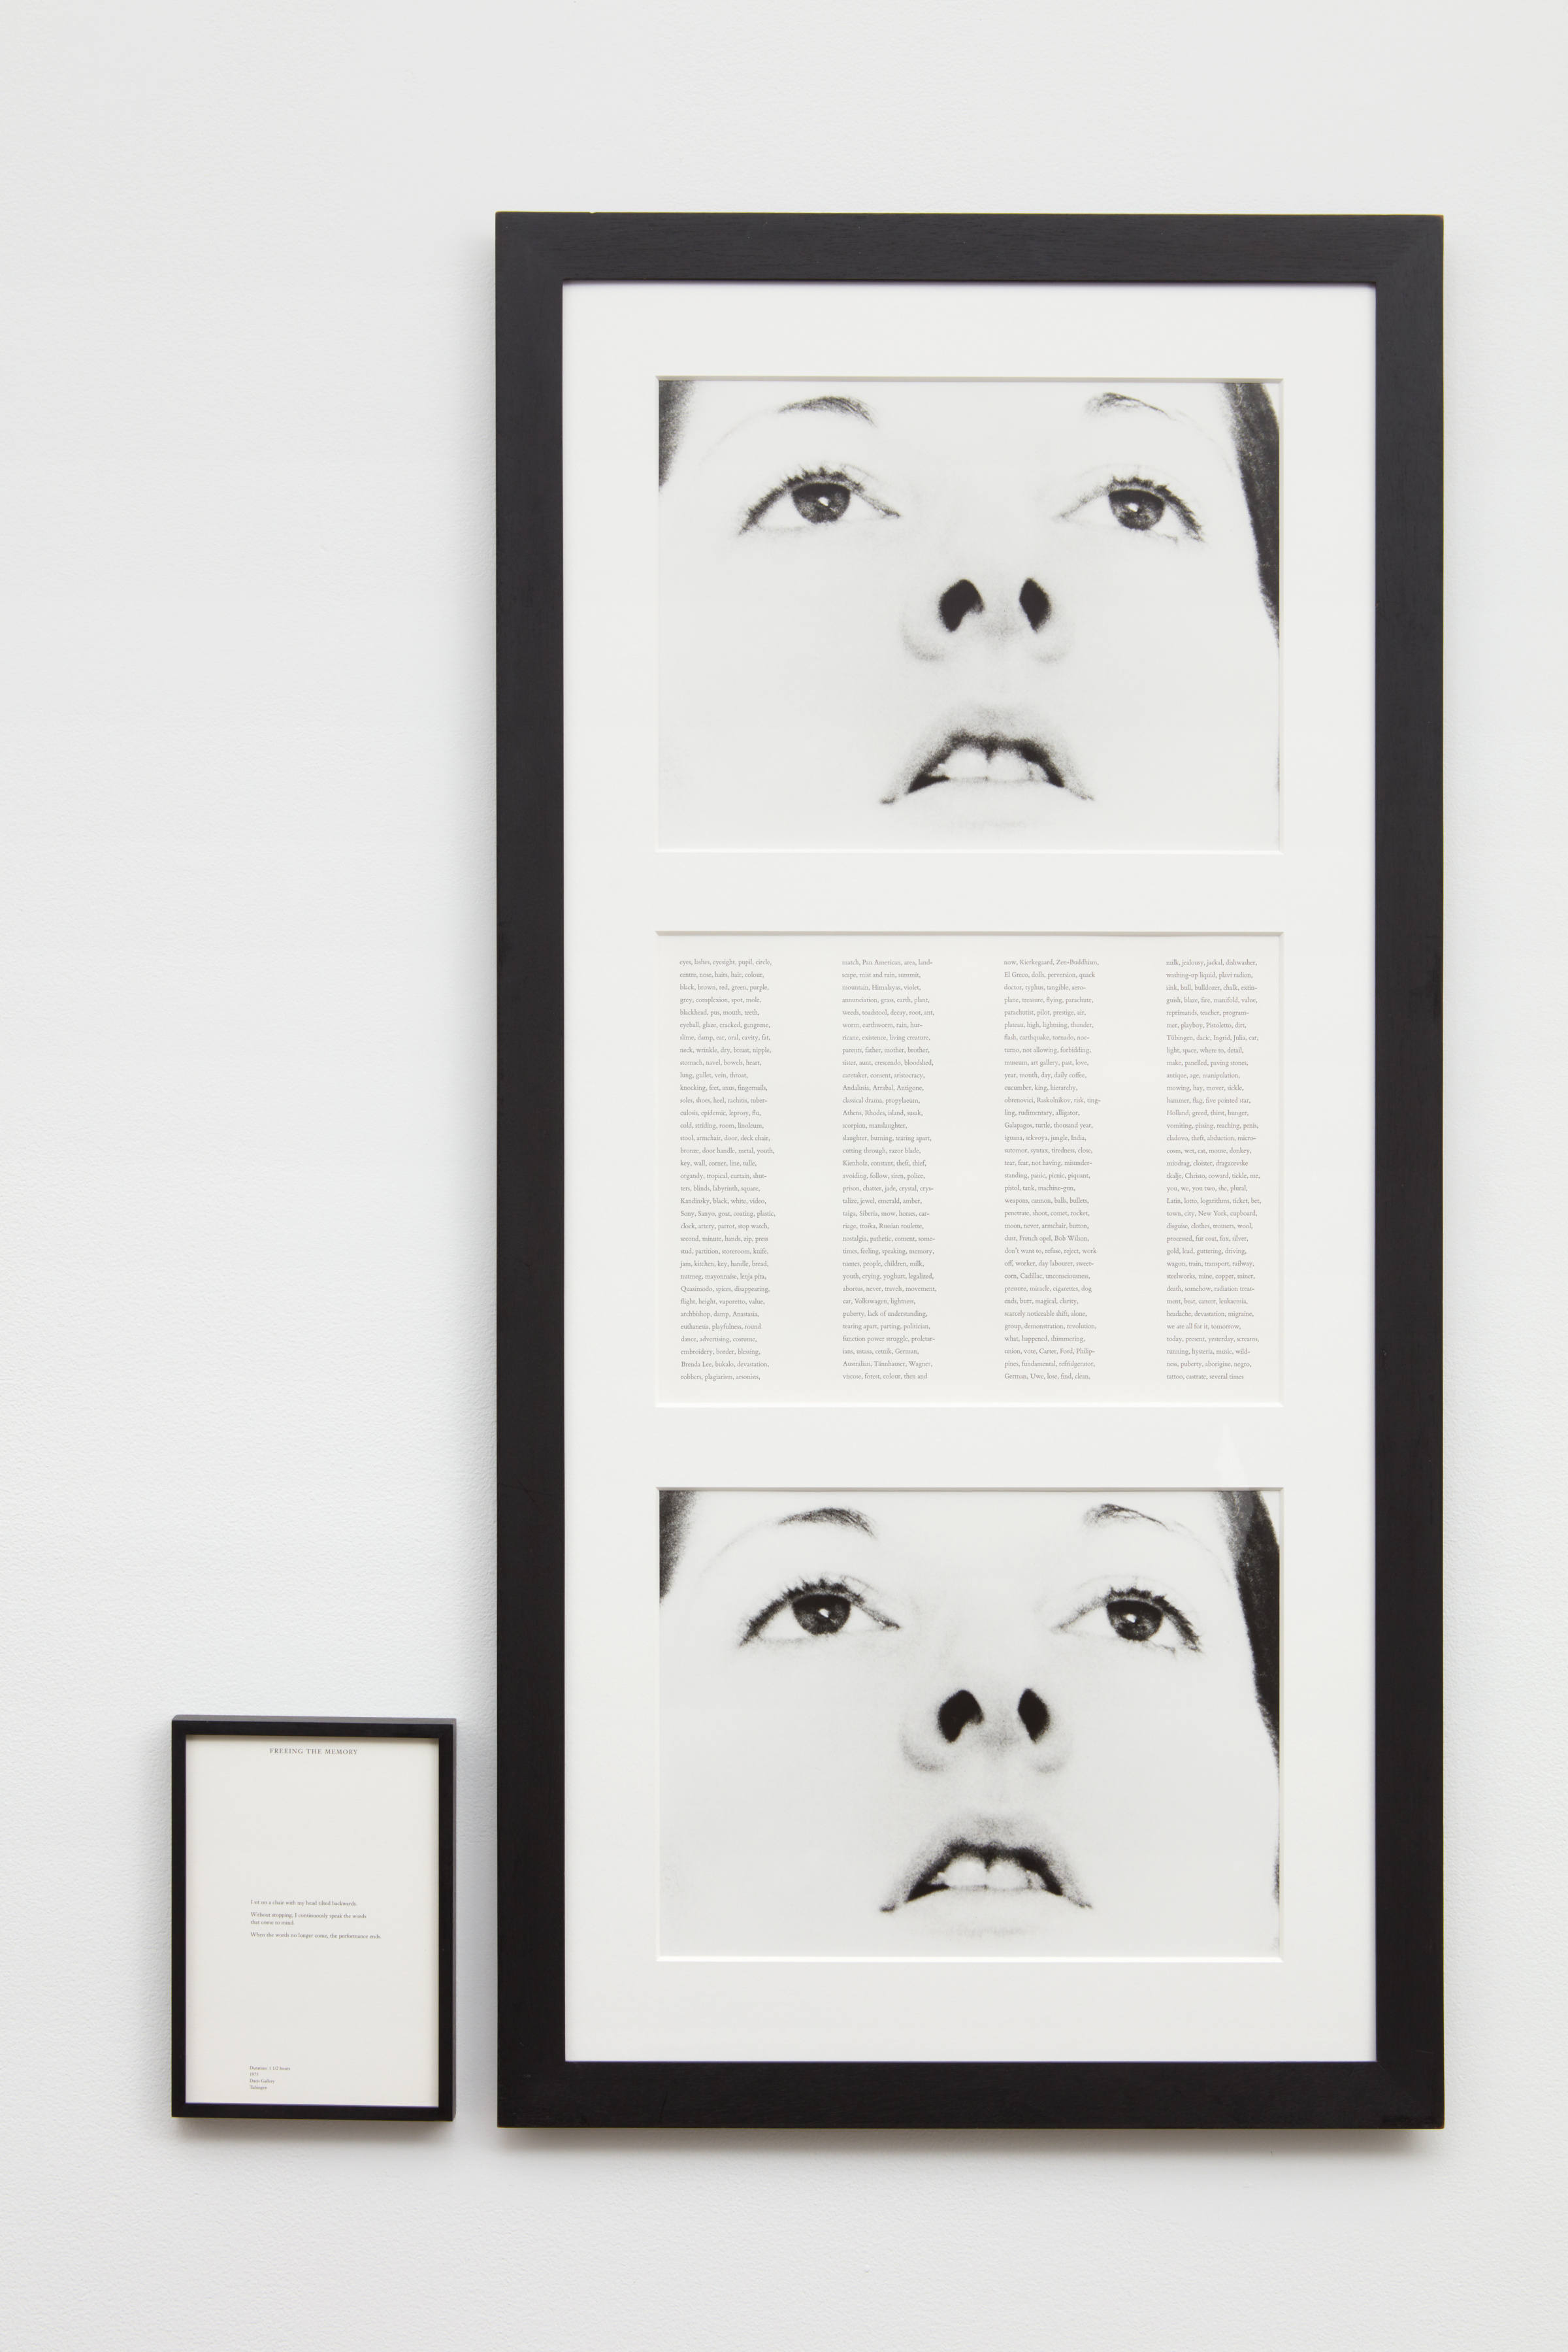 Marina Abramović | Performative -  - Viewing Room - Sean Kelly Gallery - Online Exhibition